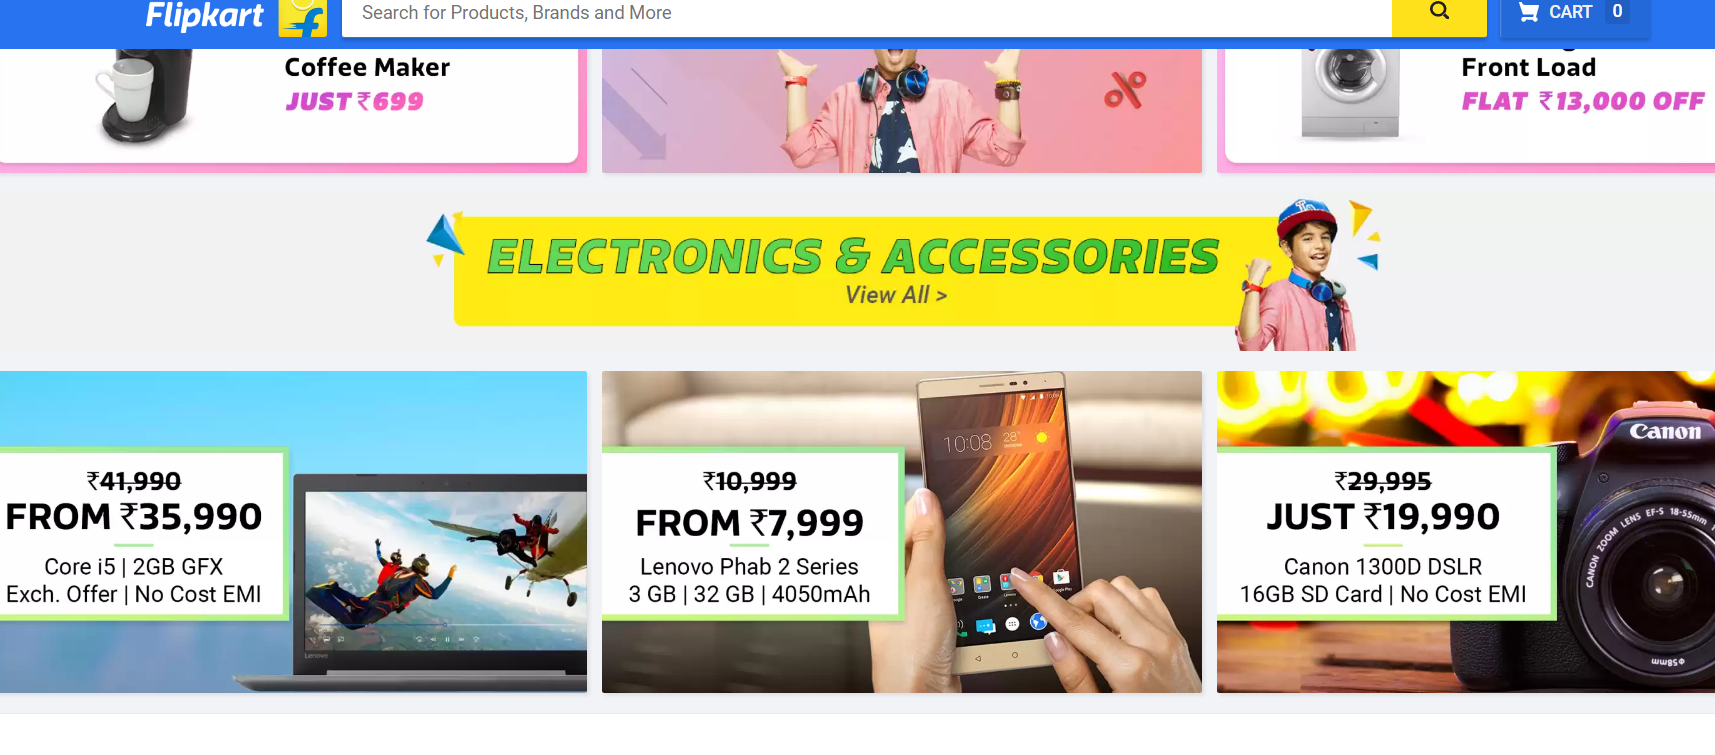 Top Picks from Flipkart Big Billion Days Sale; Big discounts for mobile phones, laptops and cameras 1